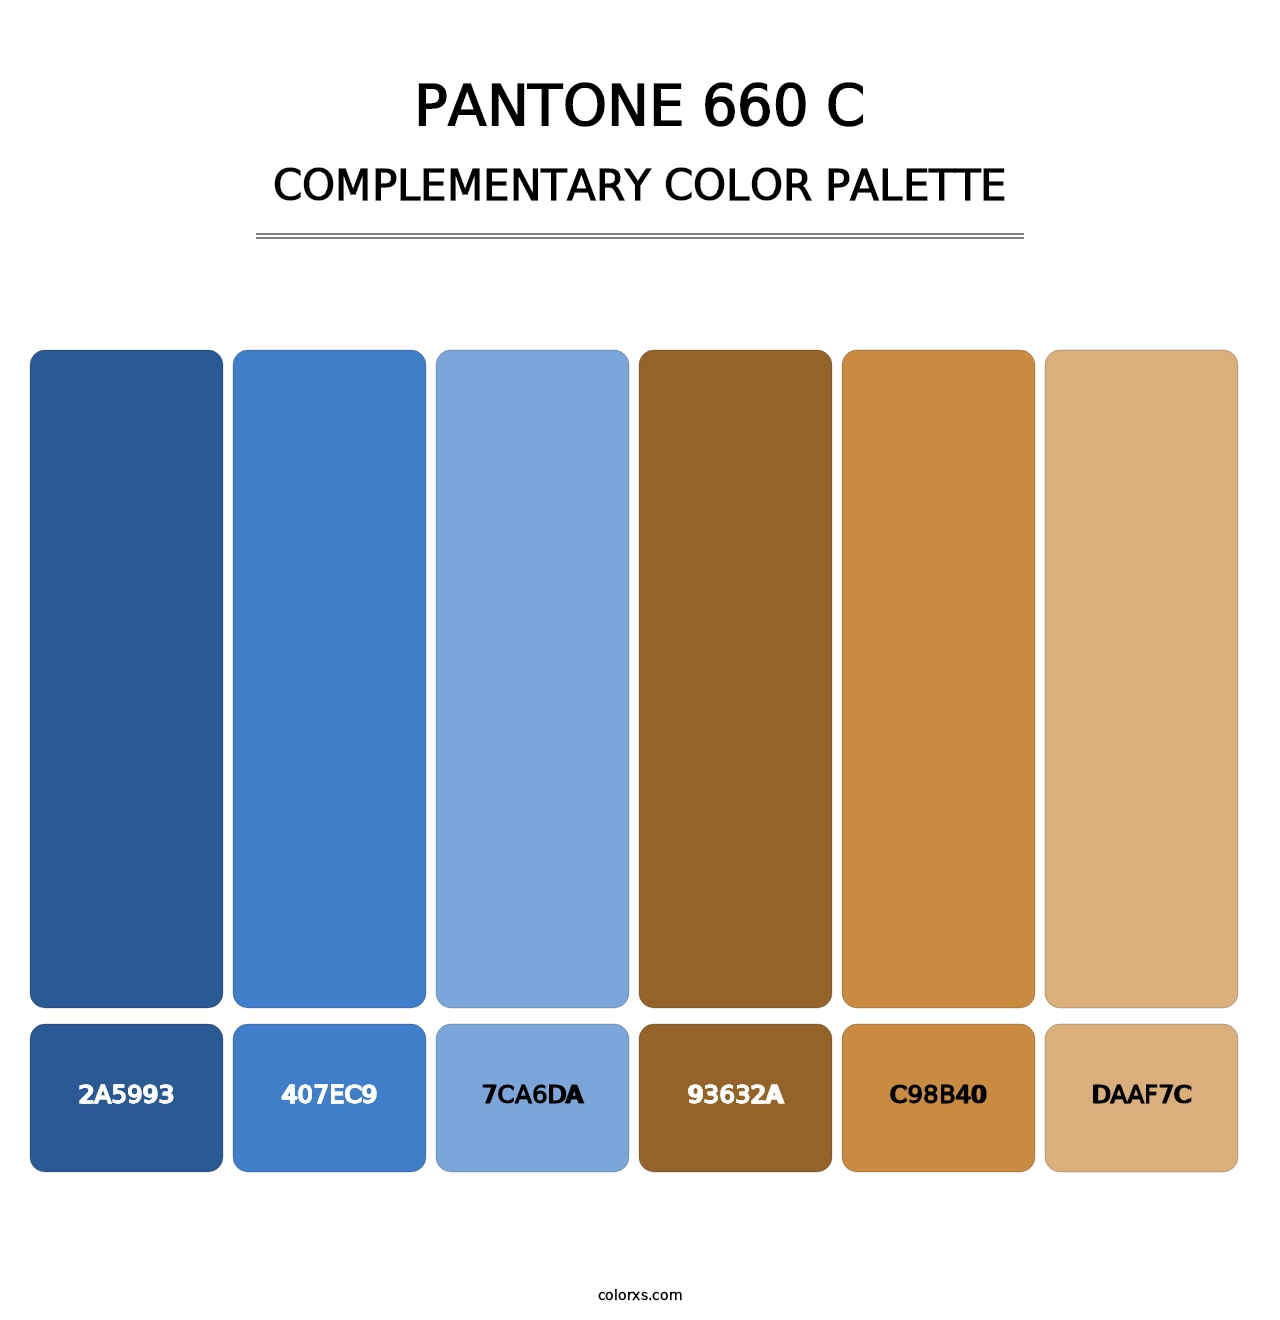 PANTONE 660 C - Complementary Color Palette